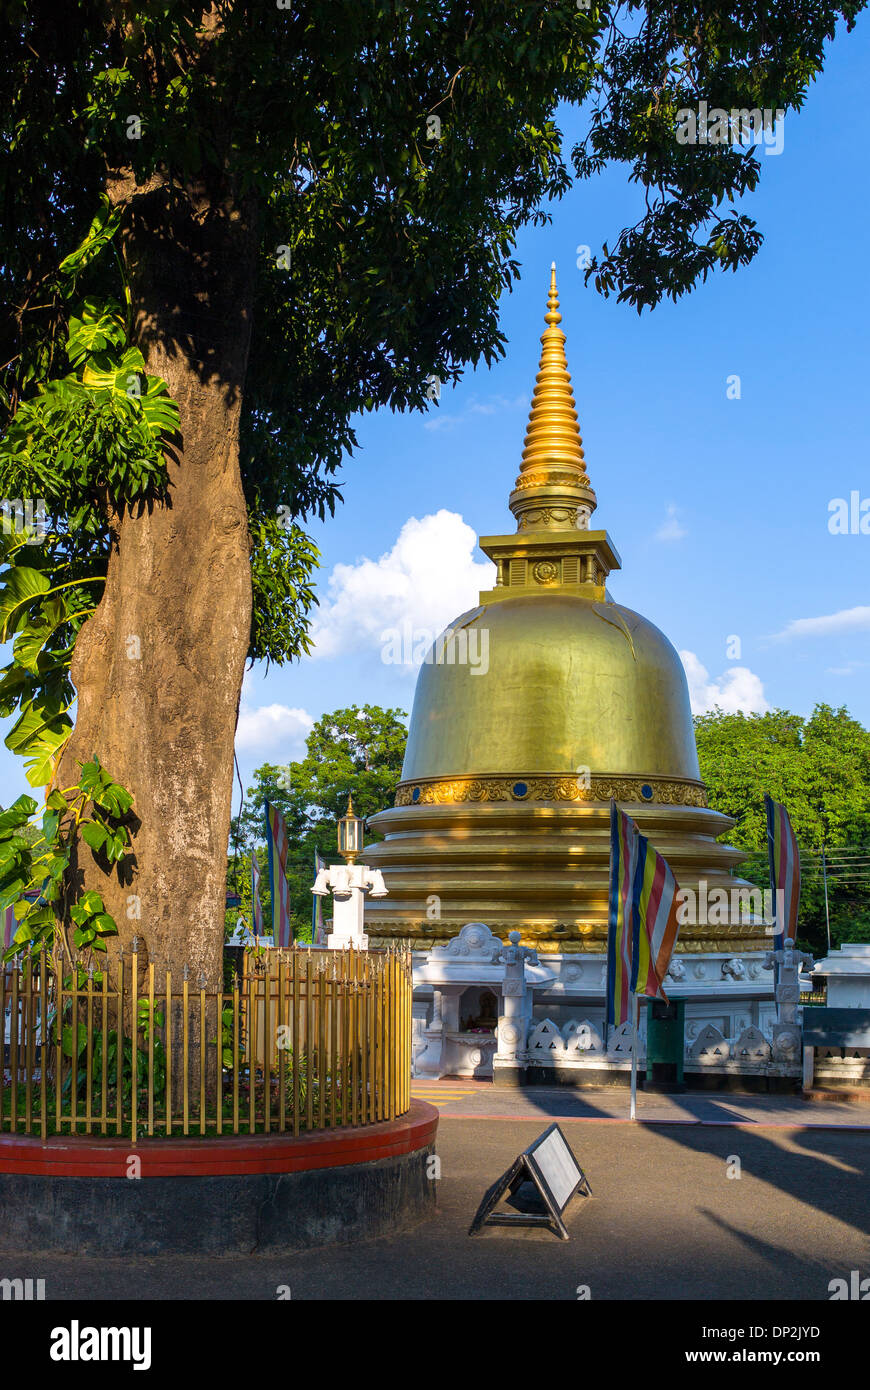 Asia Sri Lanka, Dambulla, a stupa at the entrance of the Golden Temple Stock Photo